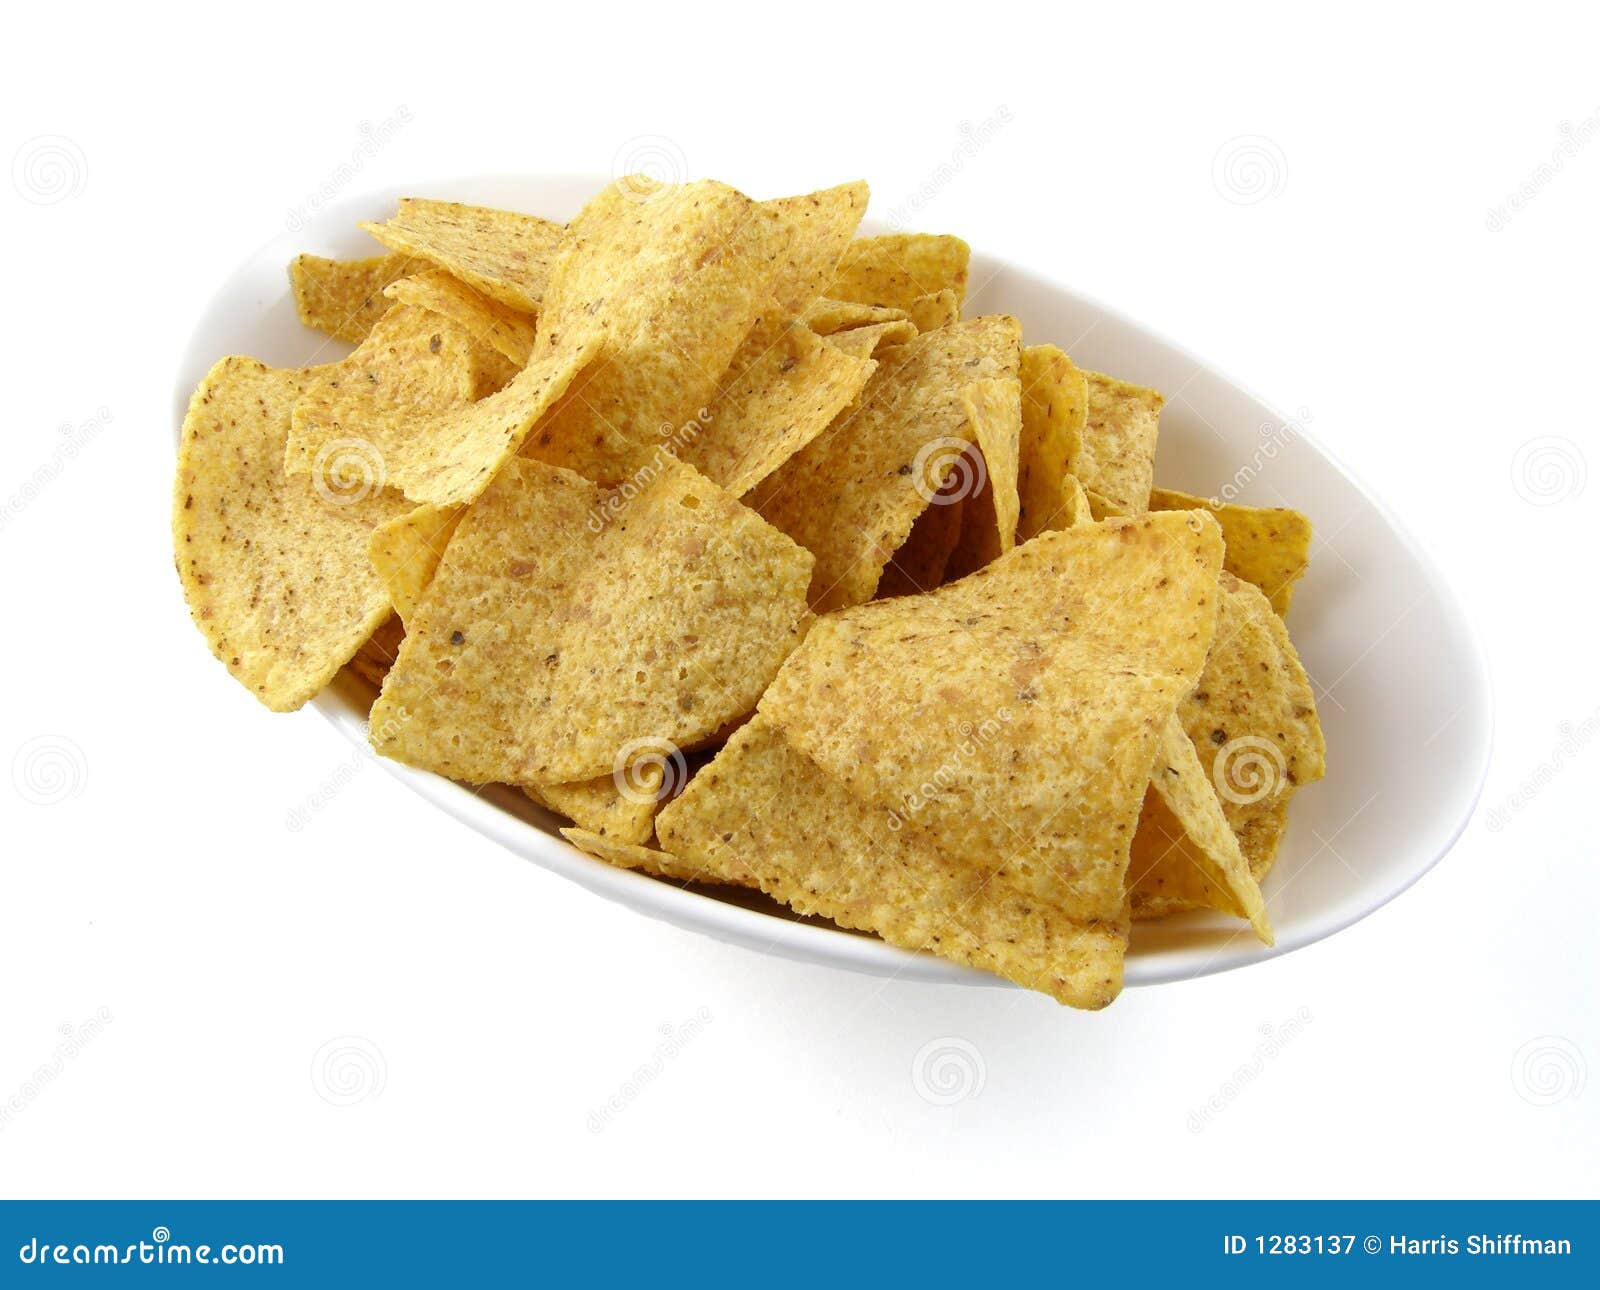 tortilla chip clipart - photo #42